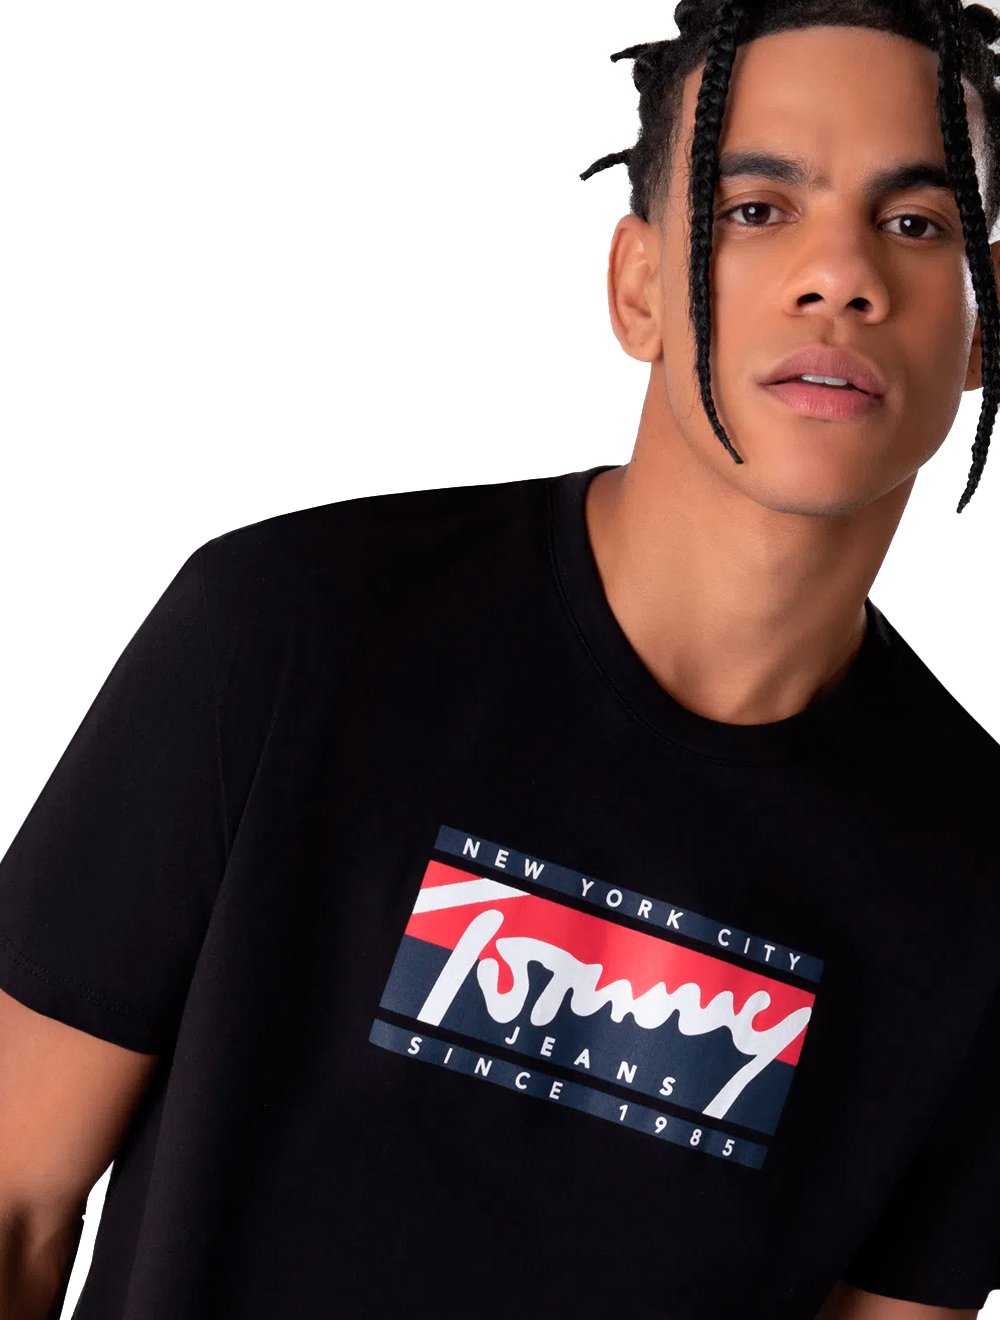 Camiseta Tommy Jeans Masculina Essential Script Tee Preta